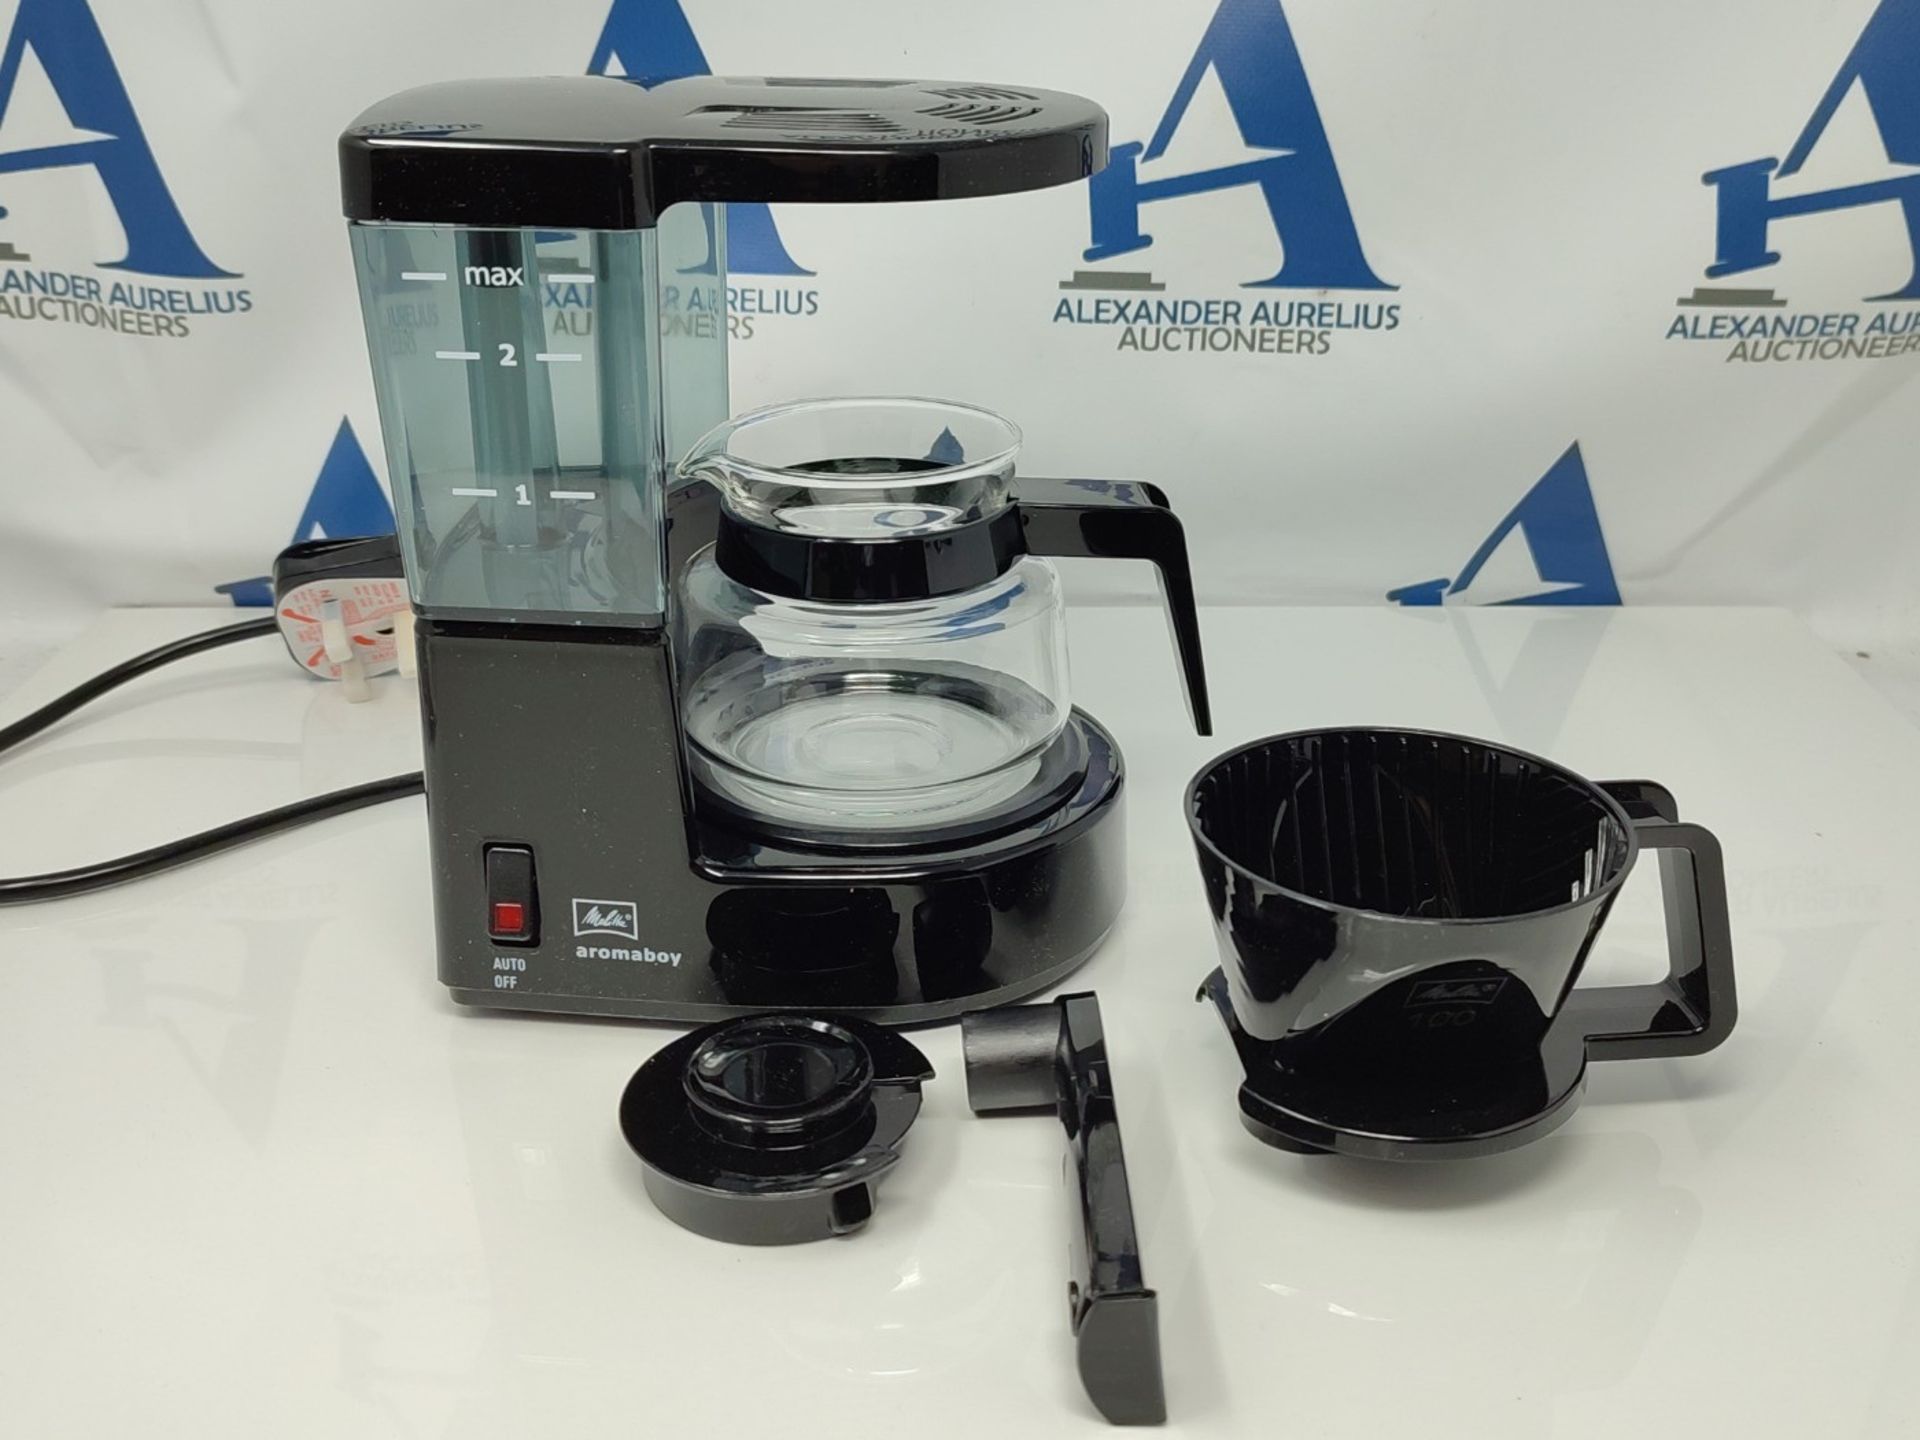 Melitta 6707286 Aroma Boy Filter Coffee Machine,0.34 liters, 500 W, Black - Image 3 of 3